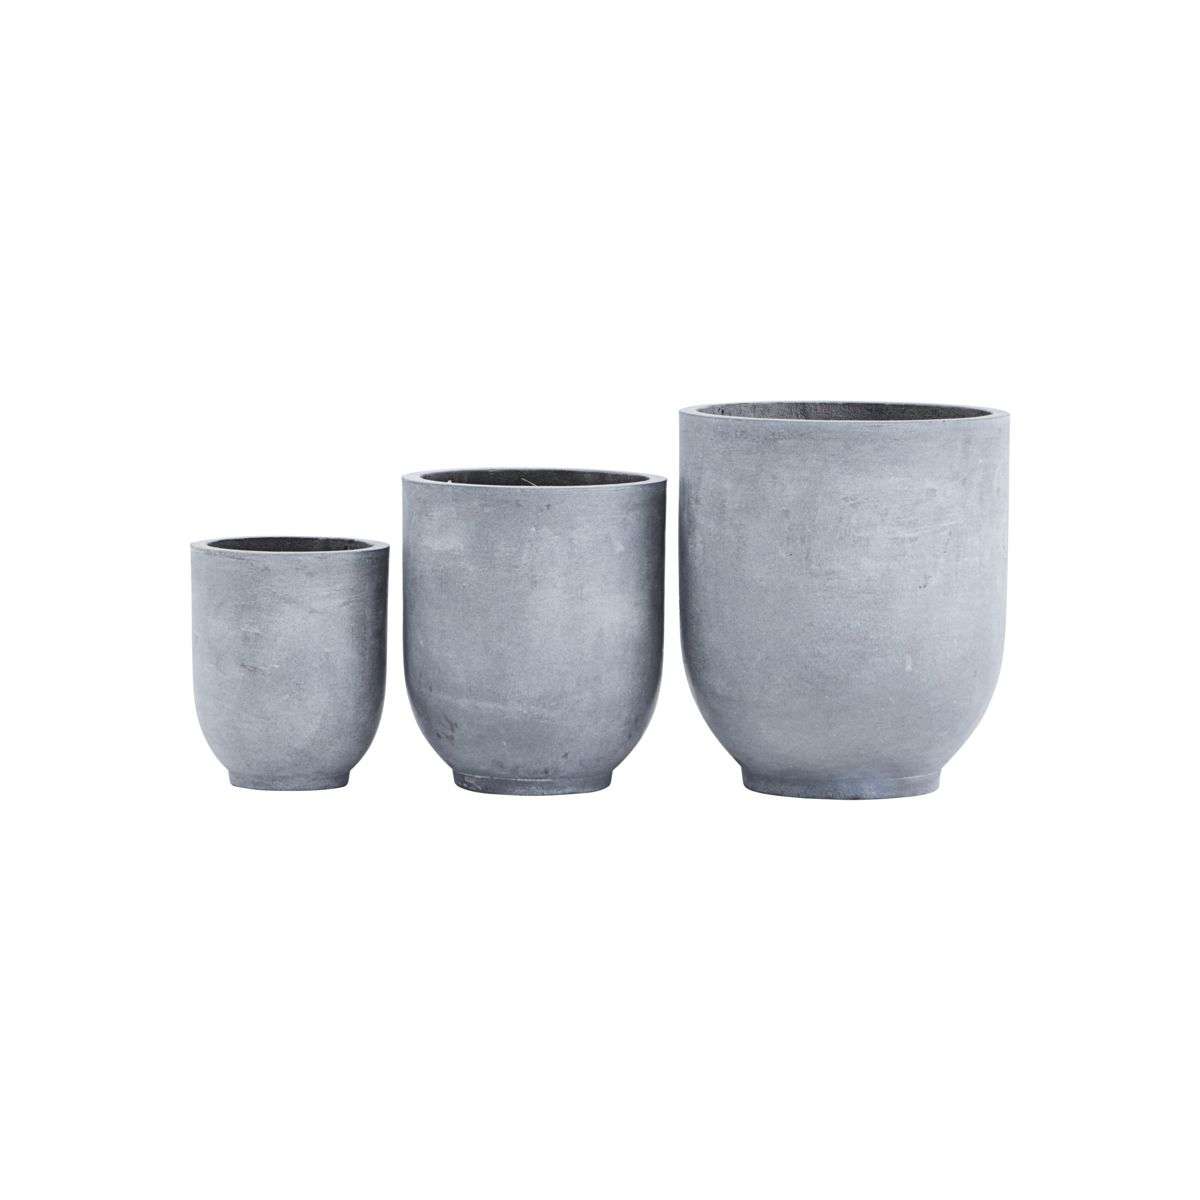 House Doctor - Gard Flowerpot Set of 3 - Grey (LY0101)